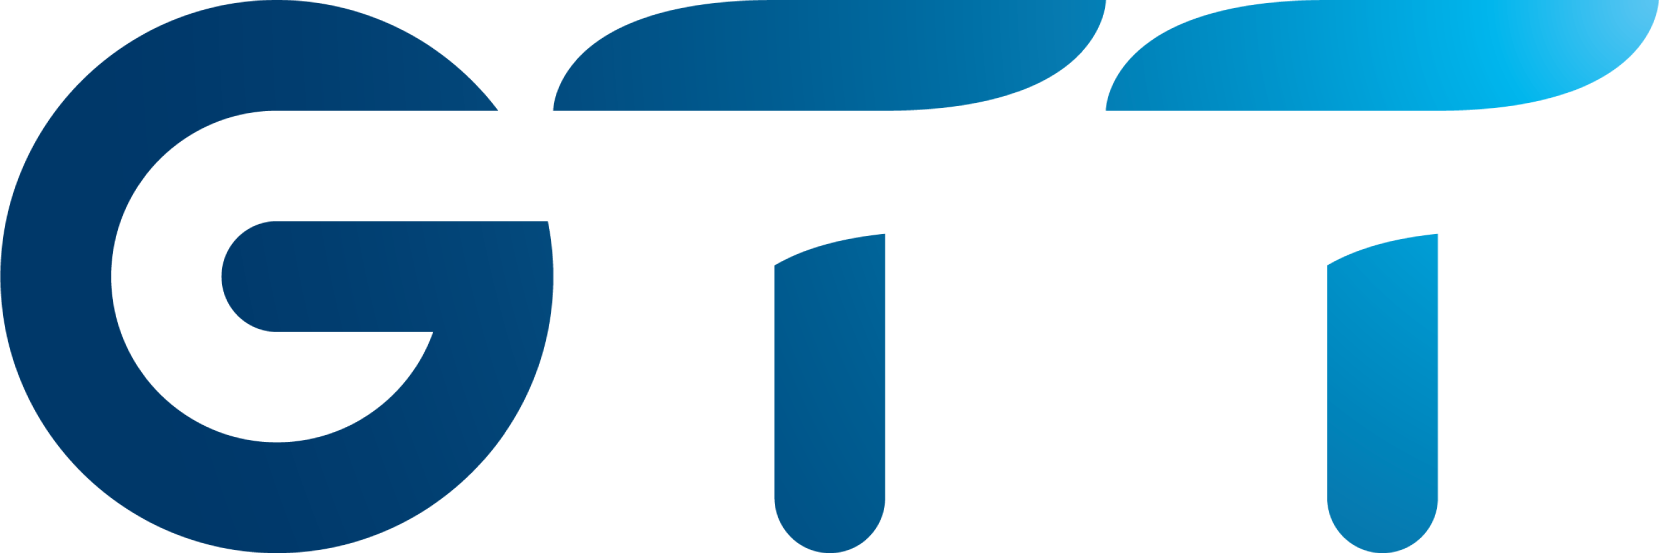 Gaztransport & Technigaz Logo (transparentes PNG)